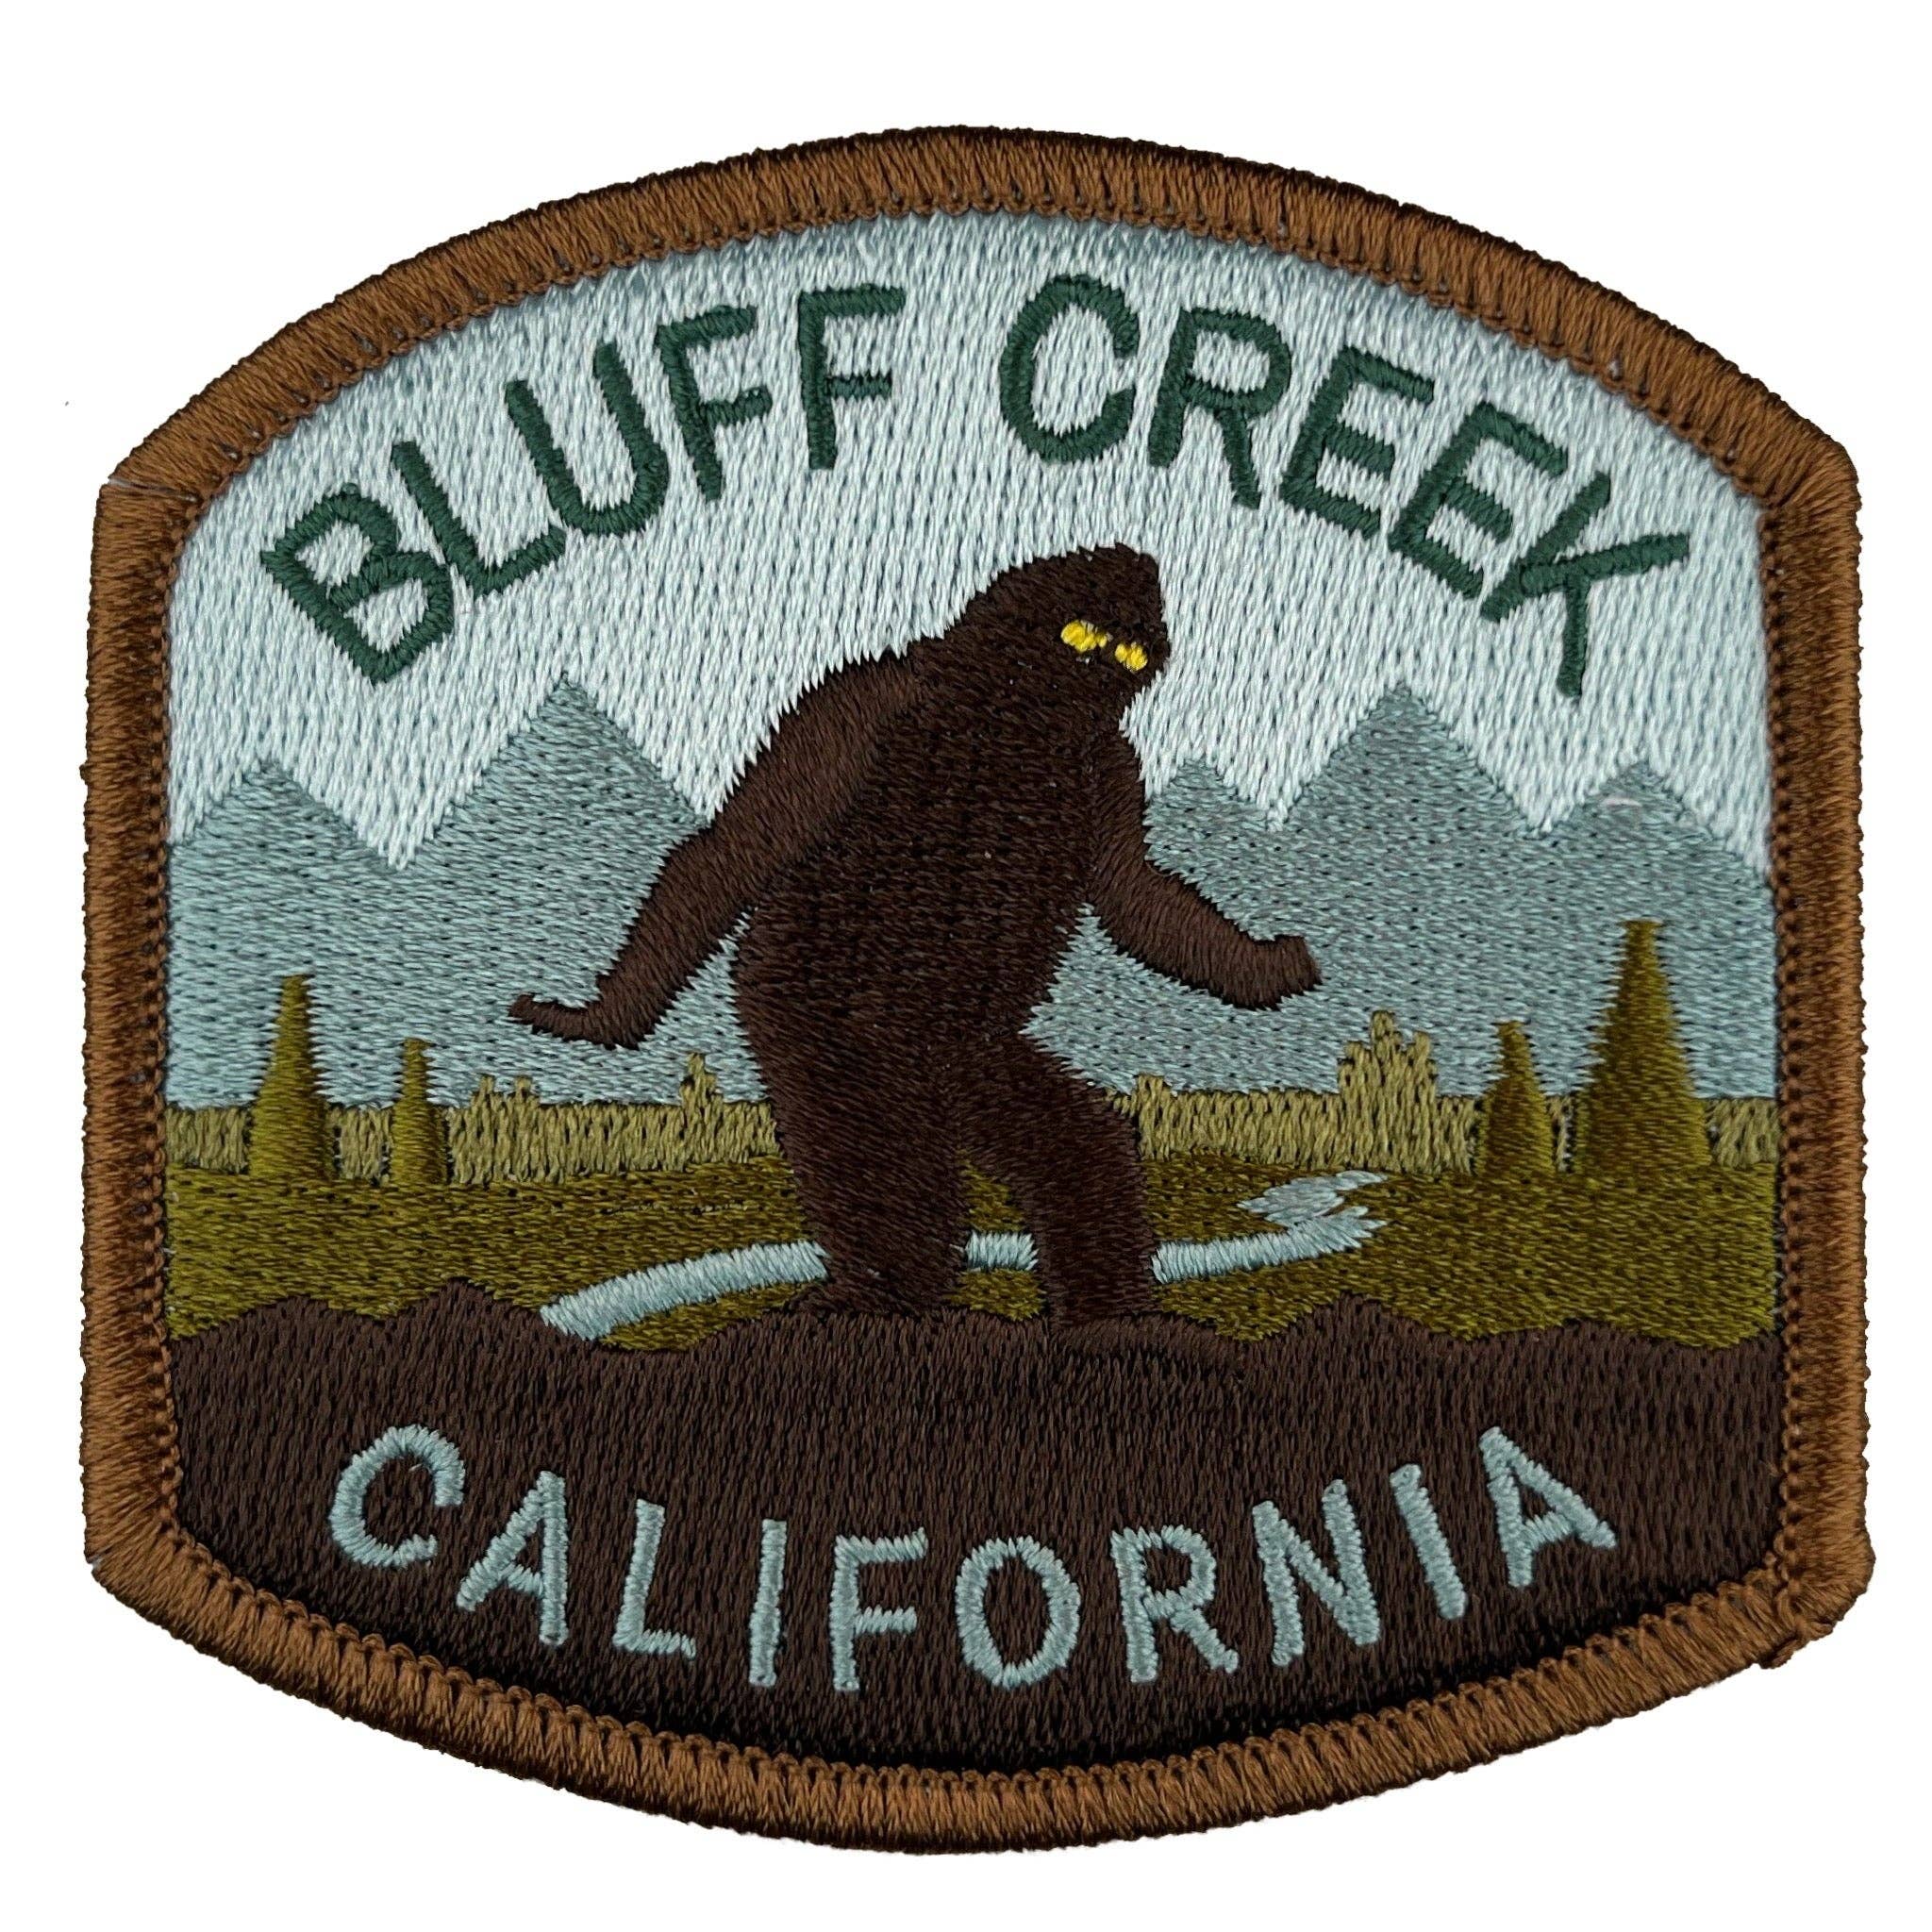 Bluff Creek, California Travel Patch: Iron-on